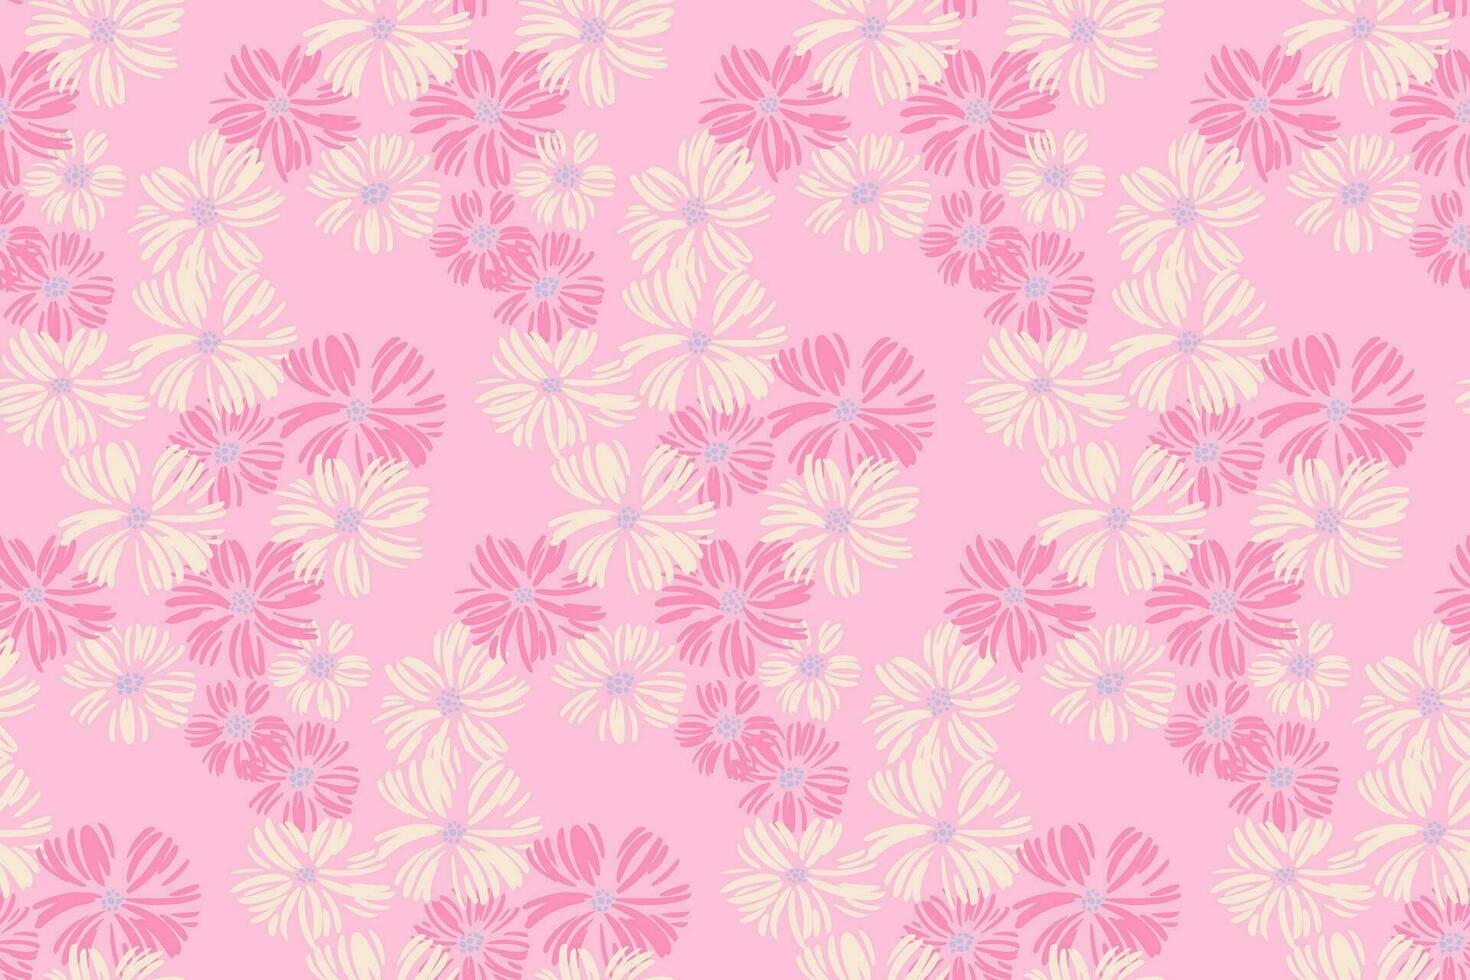 vector garabatear mano dibujado margarita flores sin costura modelo. monótono pastel rosado ditsy floral cepillo forma impresión. diseño para moda, textil, tela, fondo de pantalla